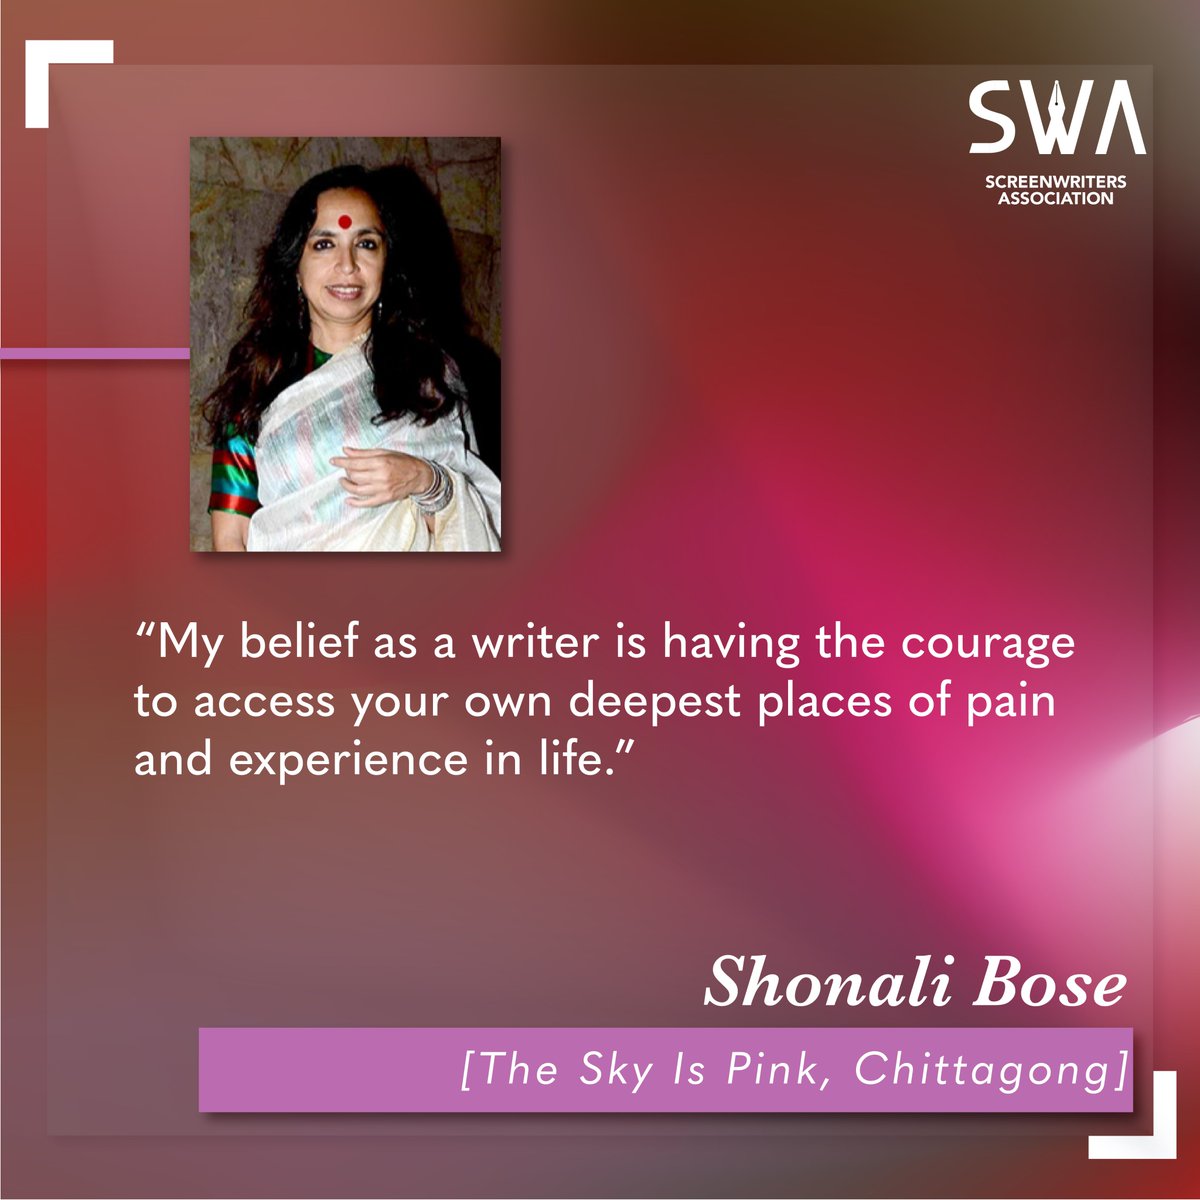 #screenwriting #swa #writerkaun #screenwriters #shonalibose #theskyispink #chittagong #quotes #screenwritingquotes #courage #pain #experience